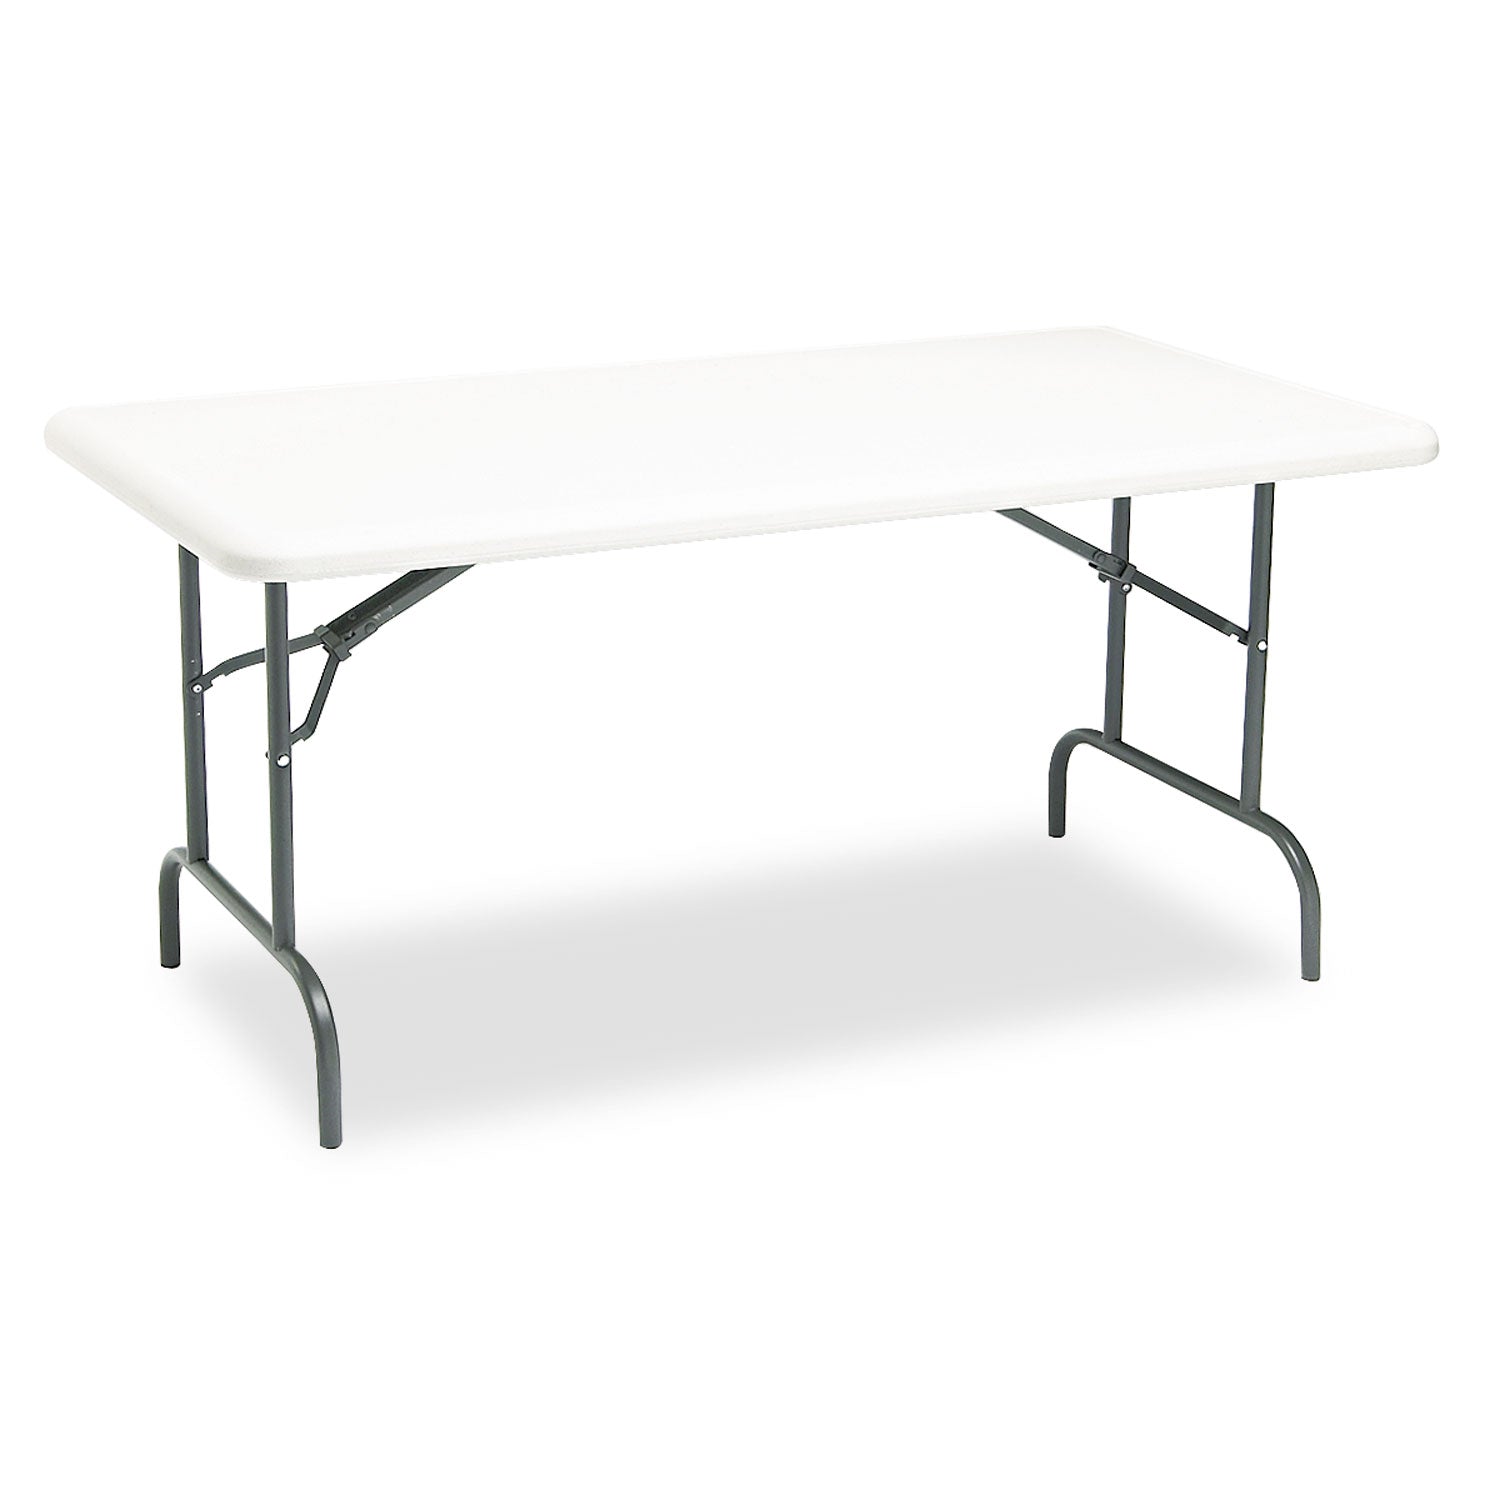 IndestrucTable Industrial Folding Table, Rectangular, 60" x 30" x 29", Platinum - 